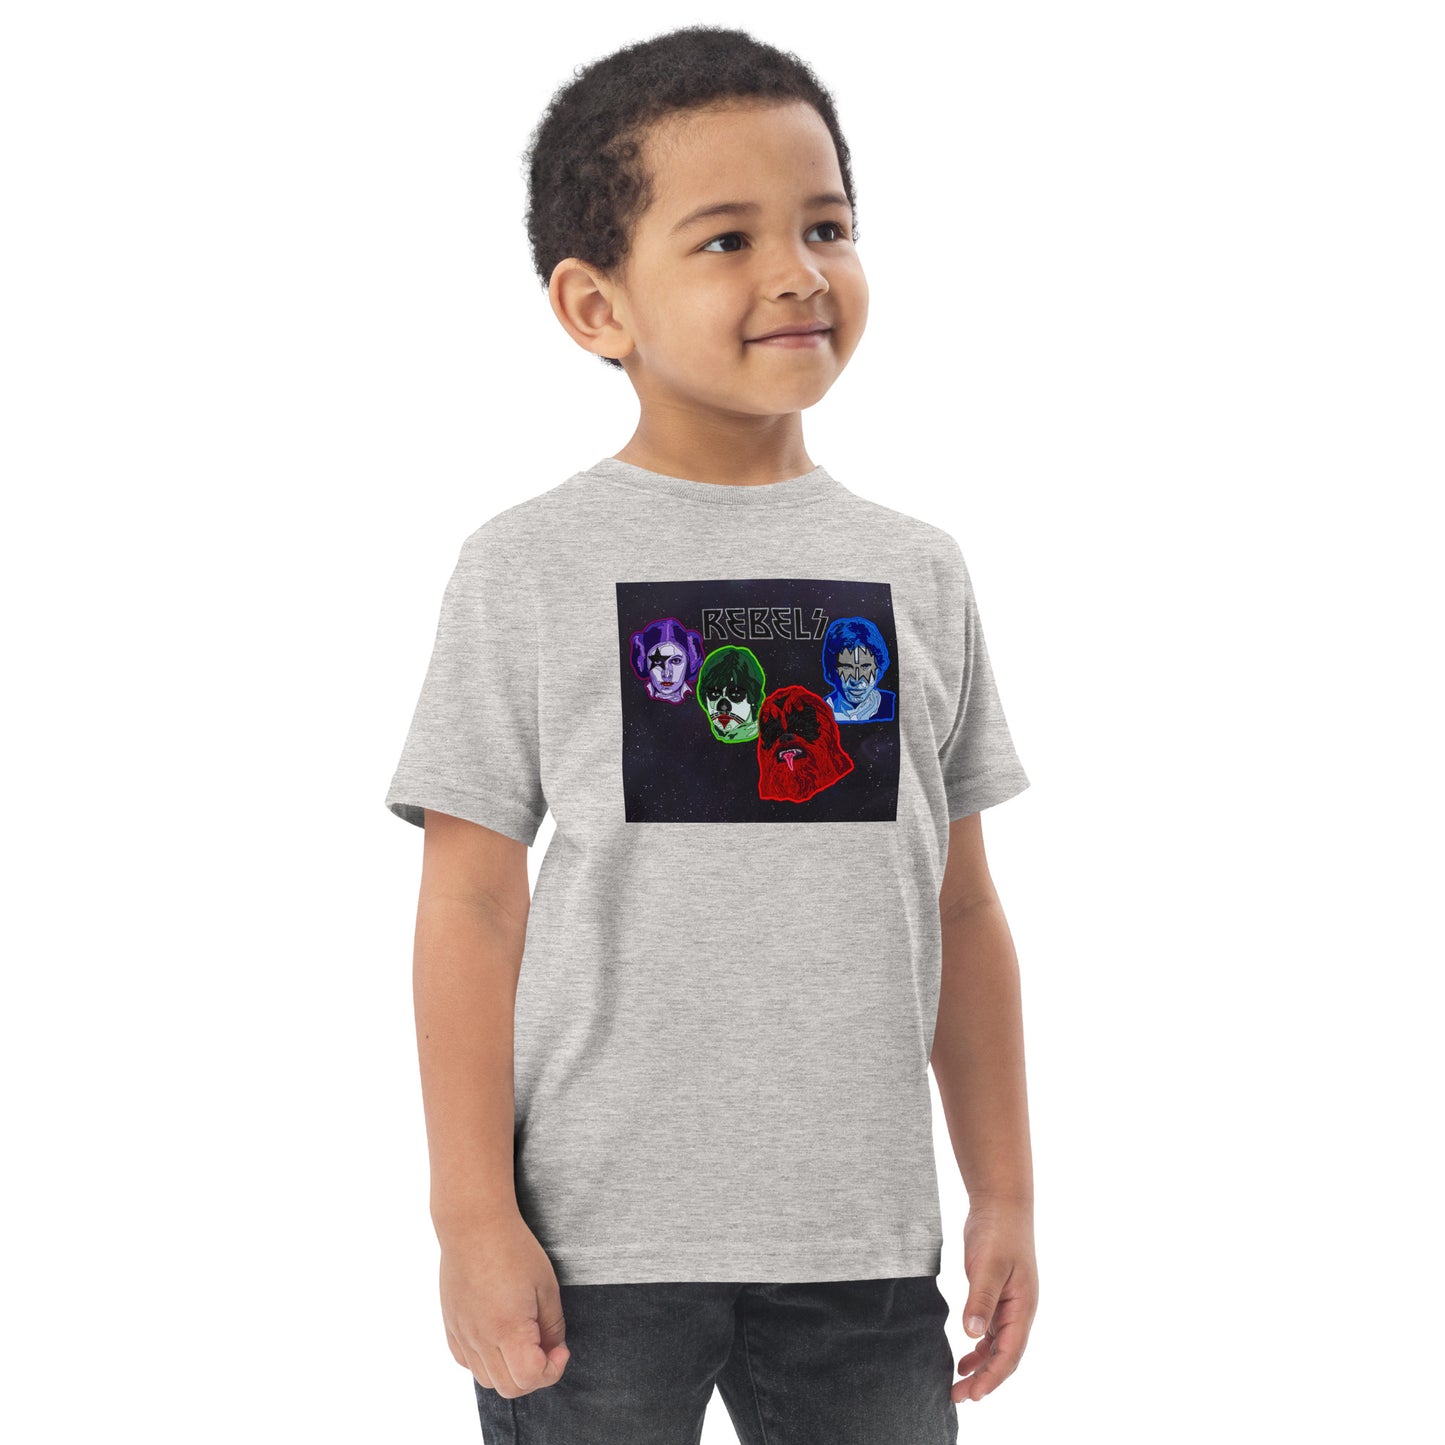 Rebels - Toddler jersey t-shirt